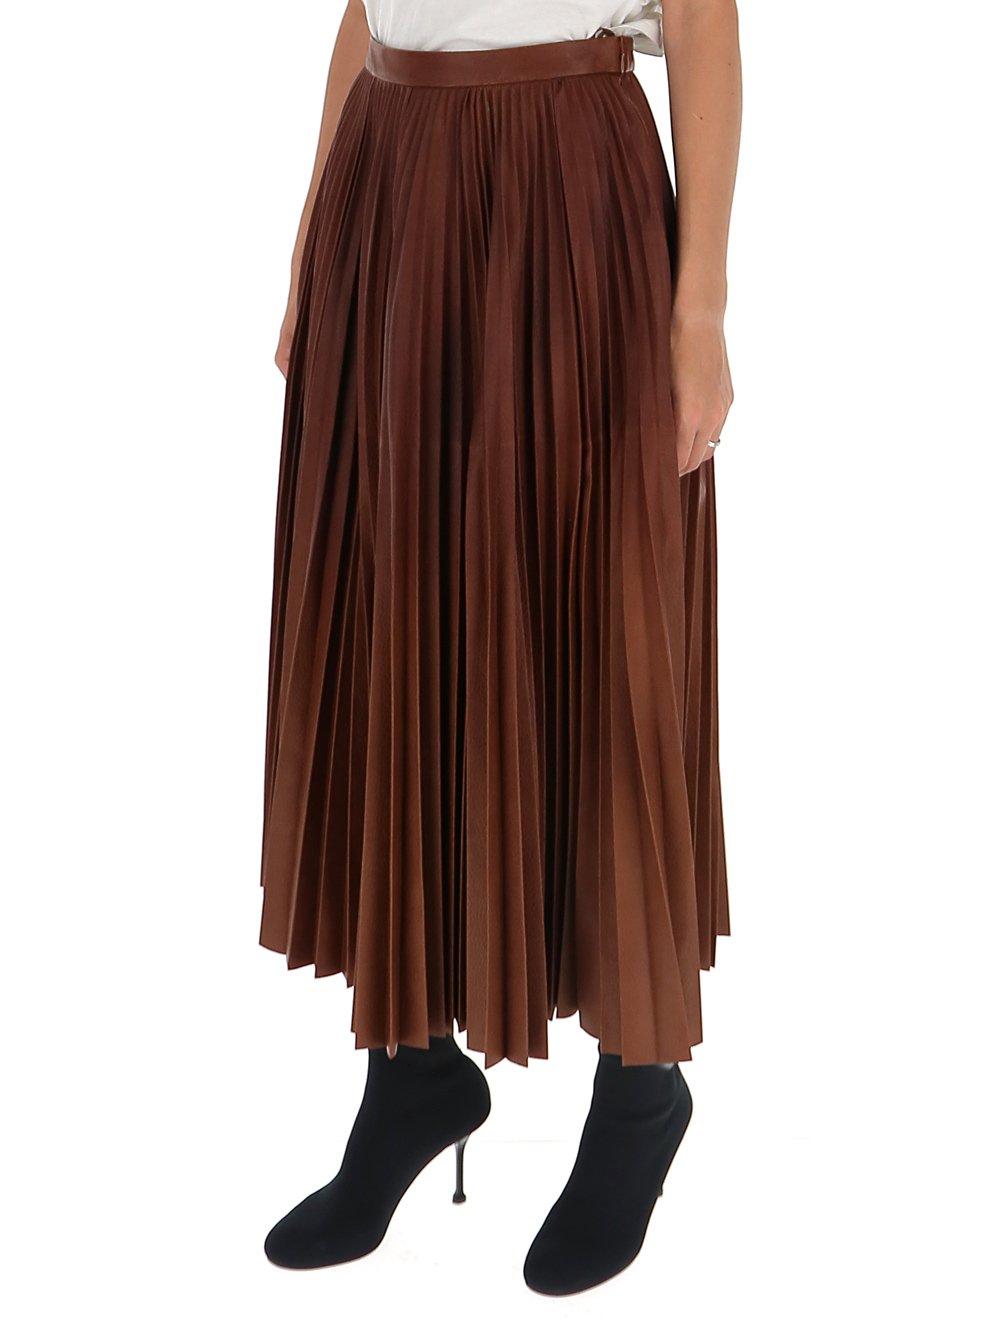 Prada Leather Pleated Midi Skirt in Brown - Lyst